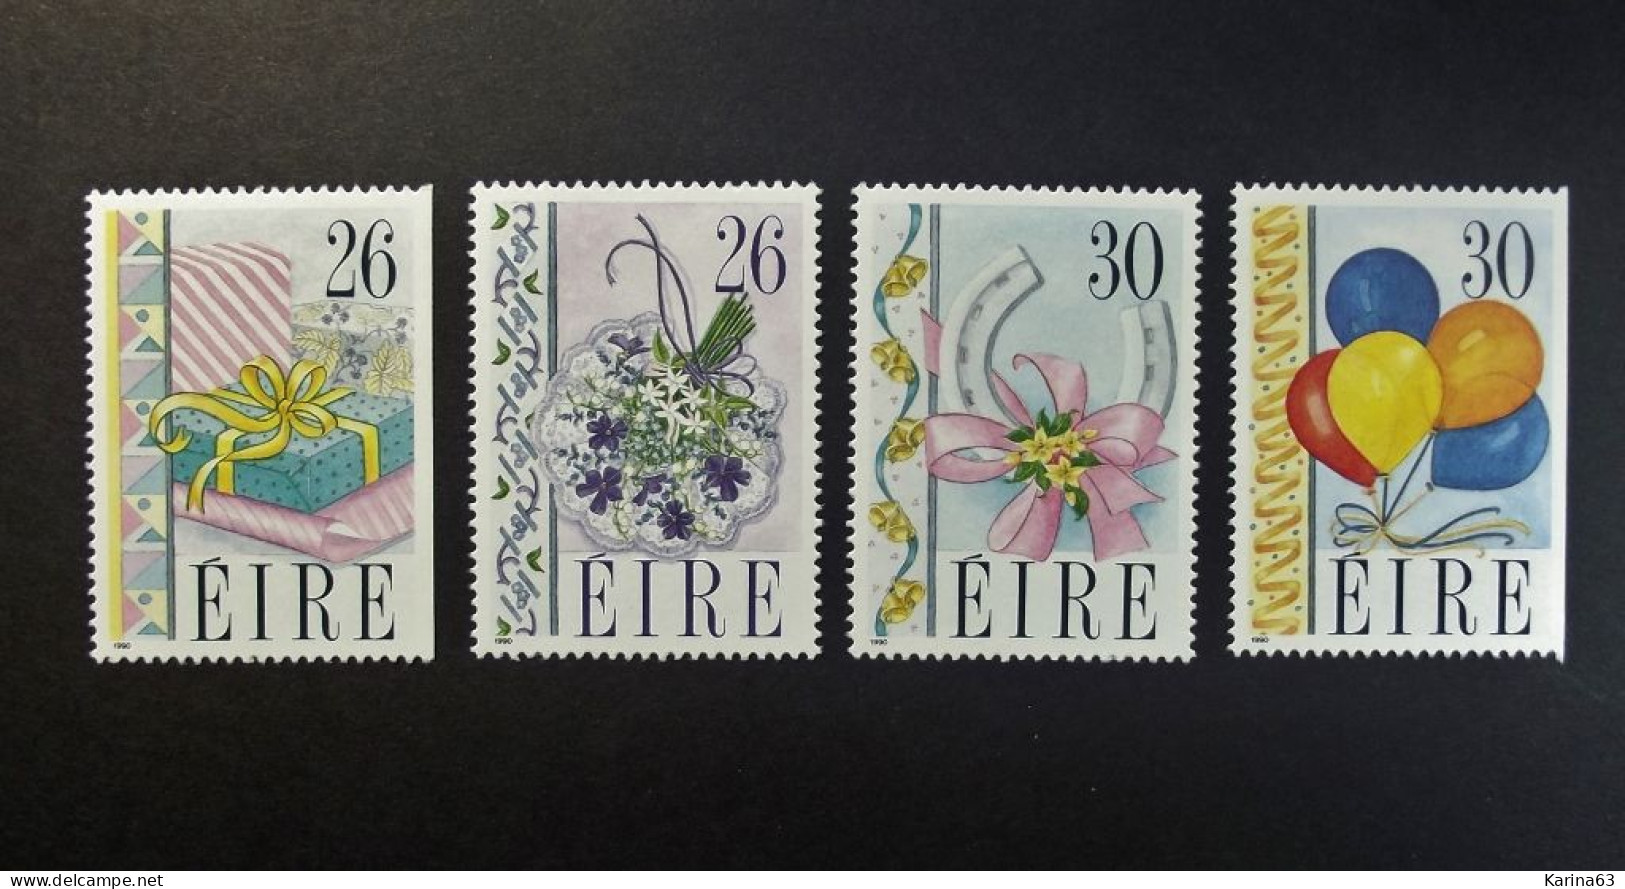 Ireland - Irelande - Eire - 1990  Y&T N° 711 / 714  ( 4 Val.) Wishing Stamps -  MNH - Postfris - Neufs